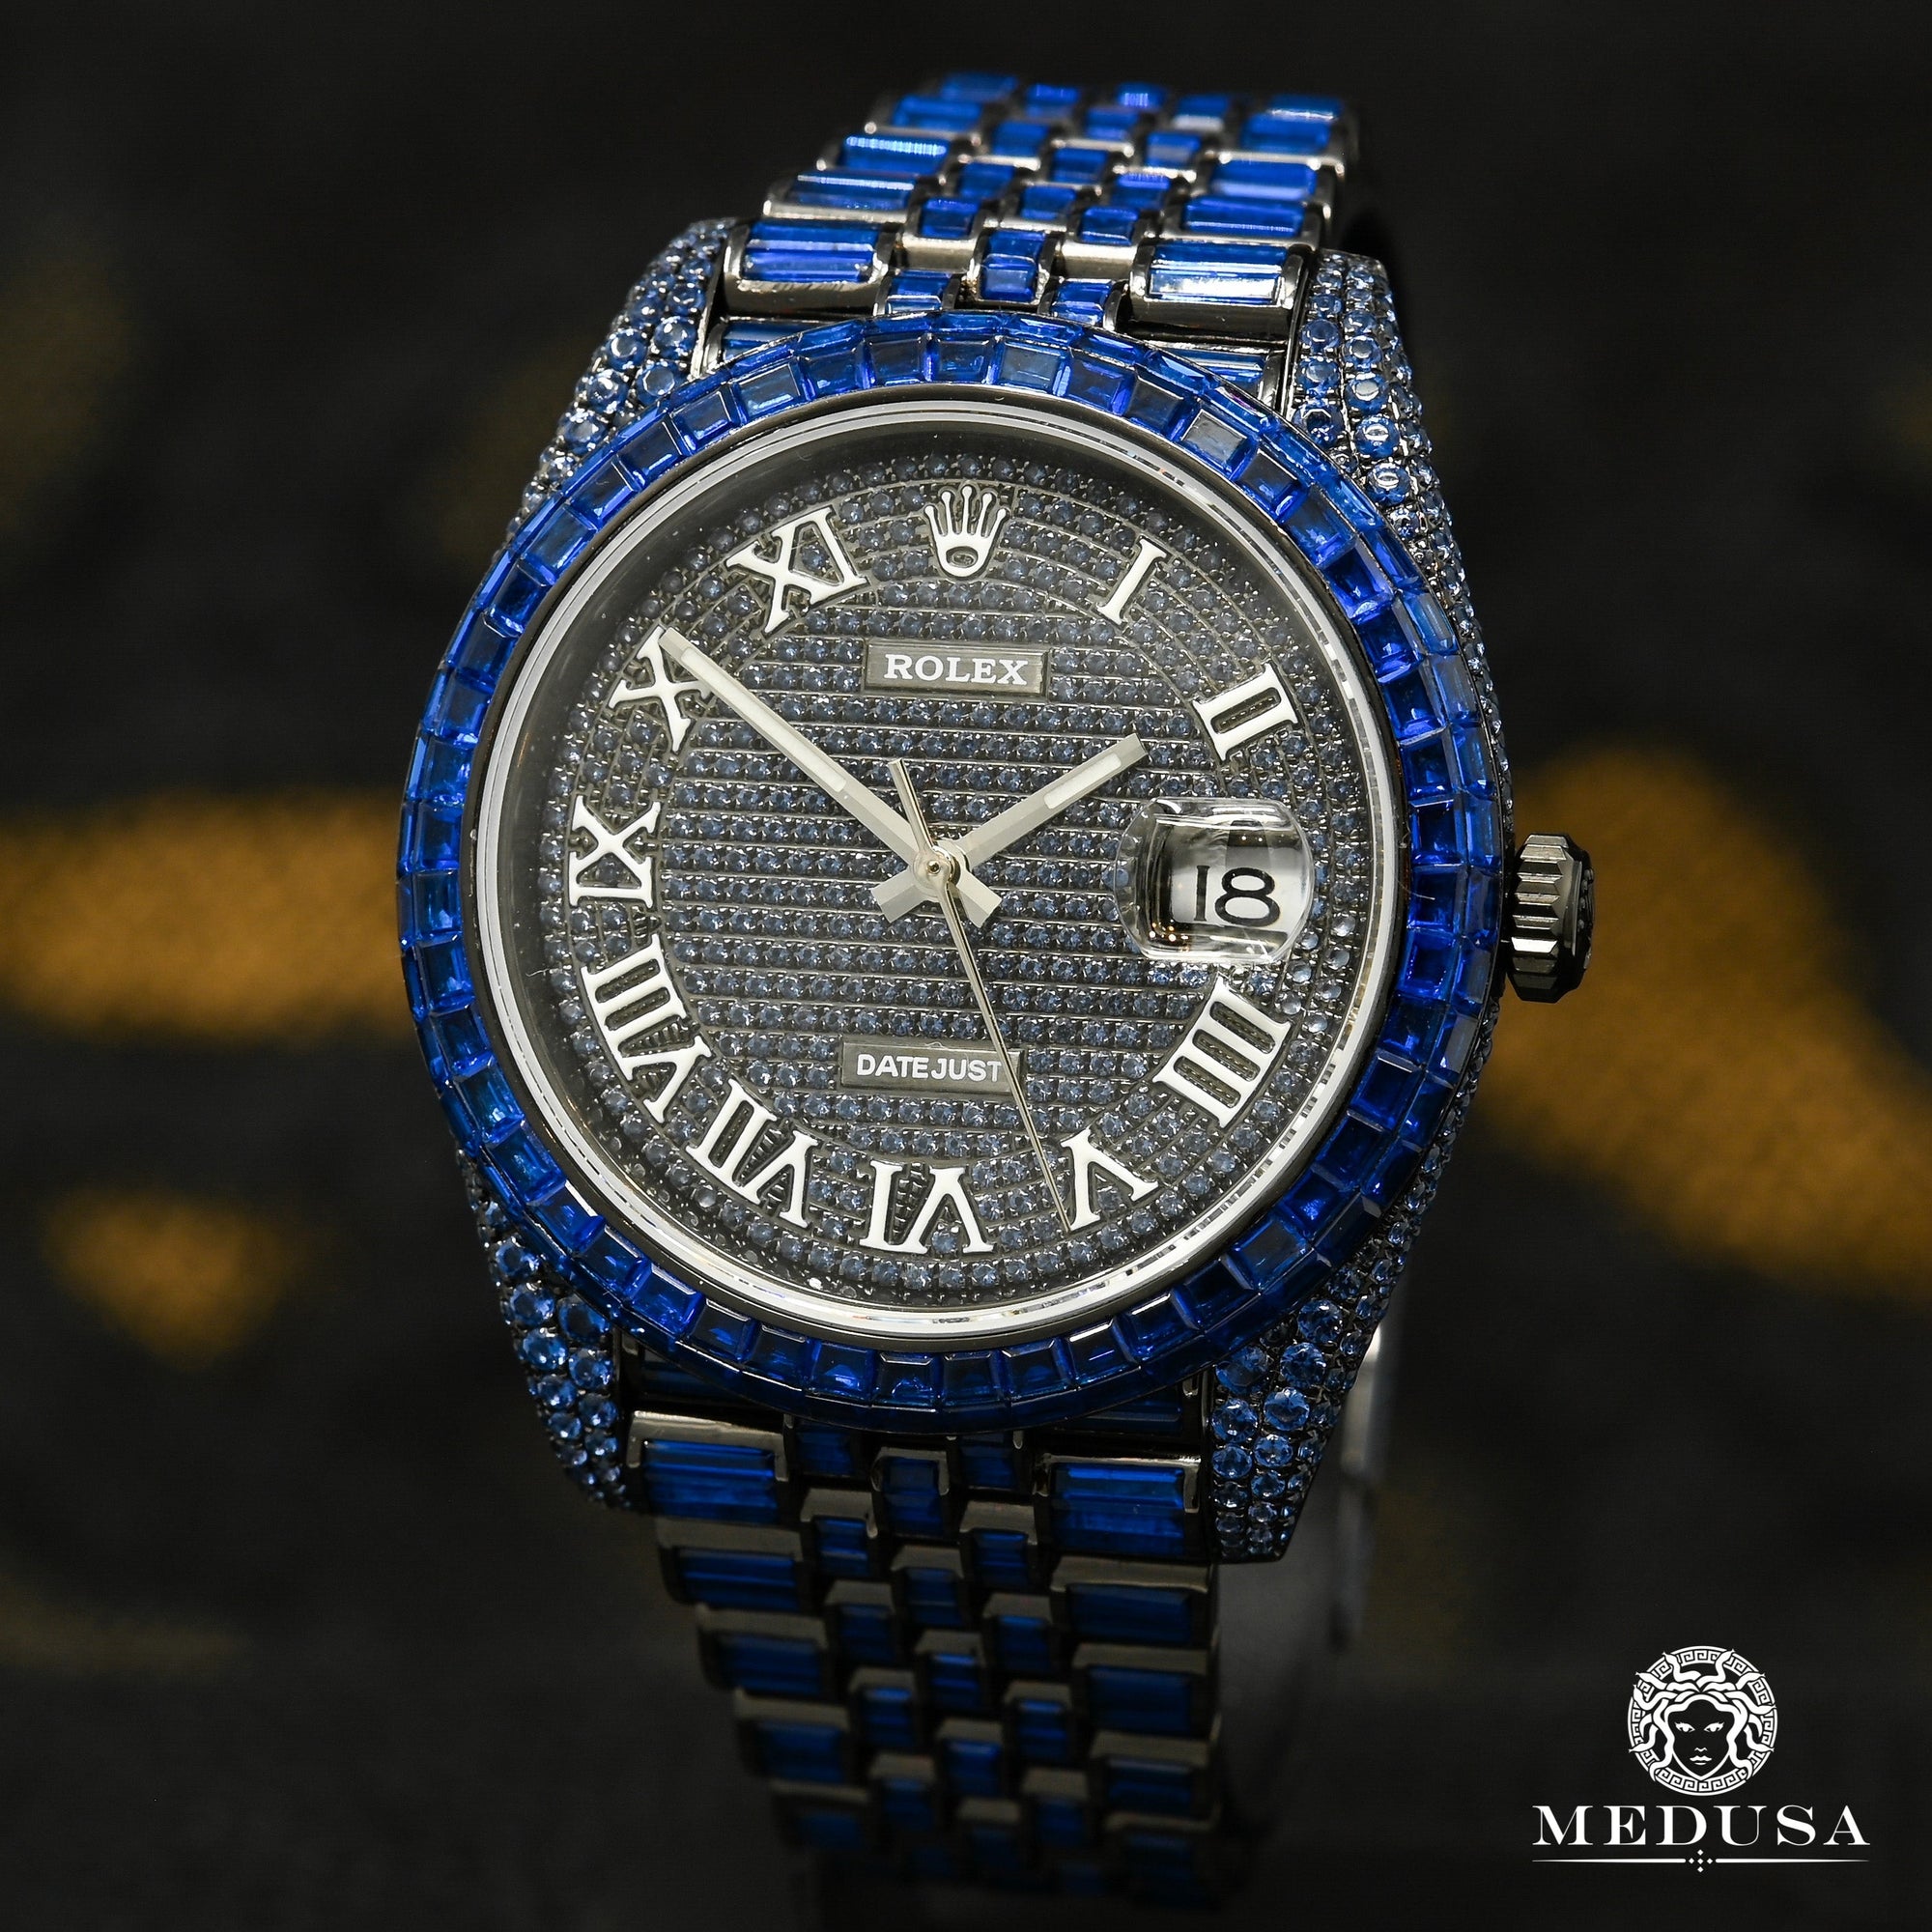 Rolex Datejust 41 mm - Zafiro negro y azul